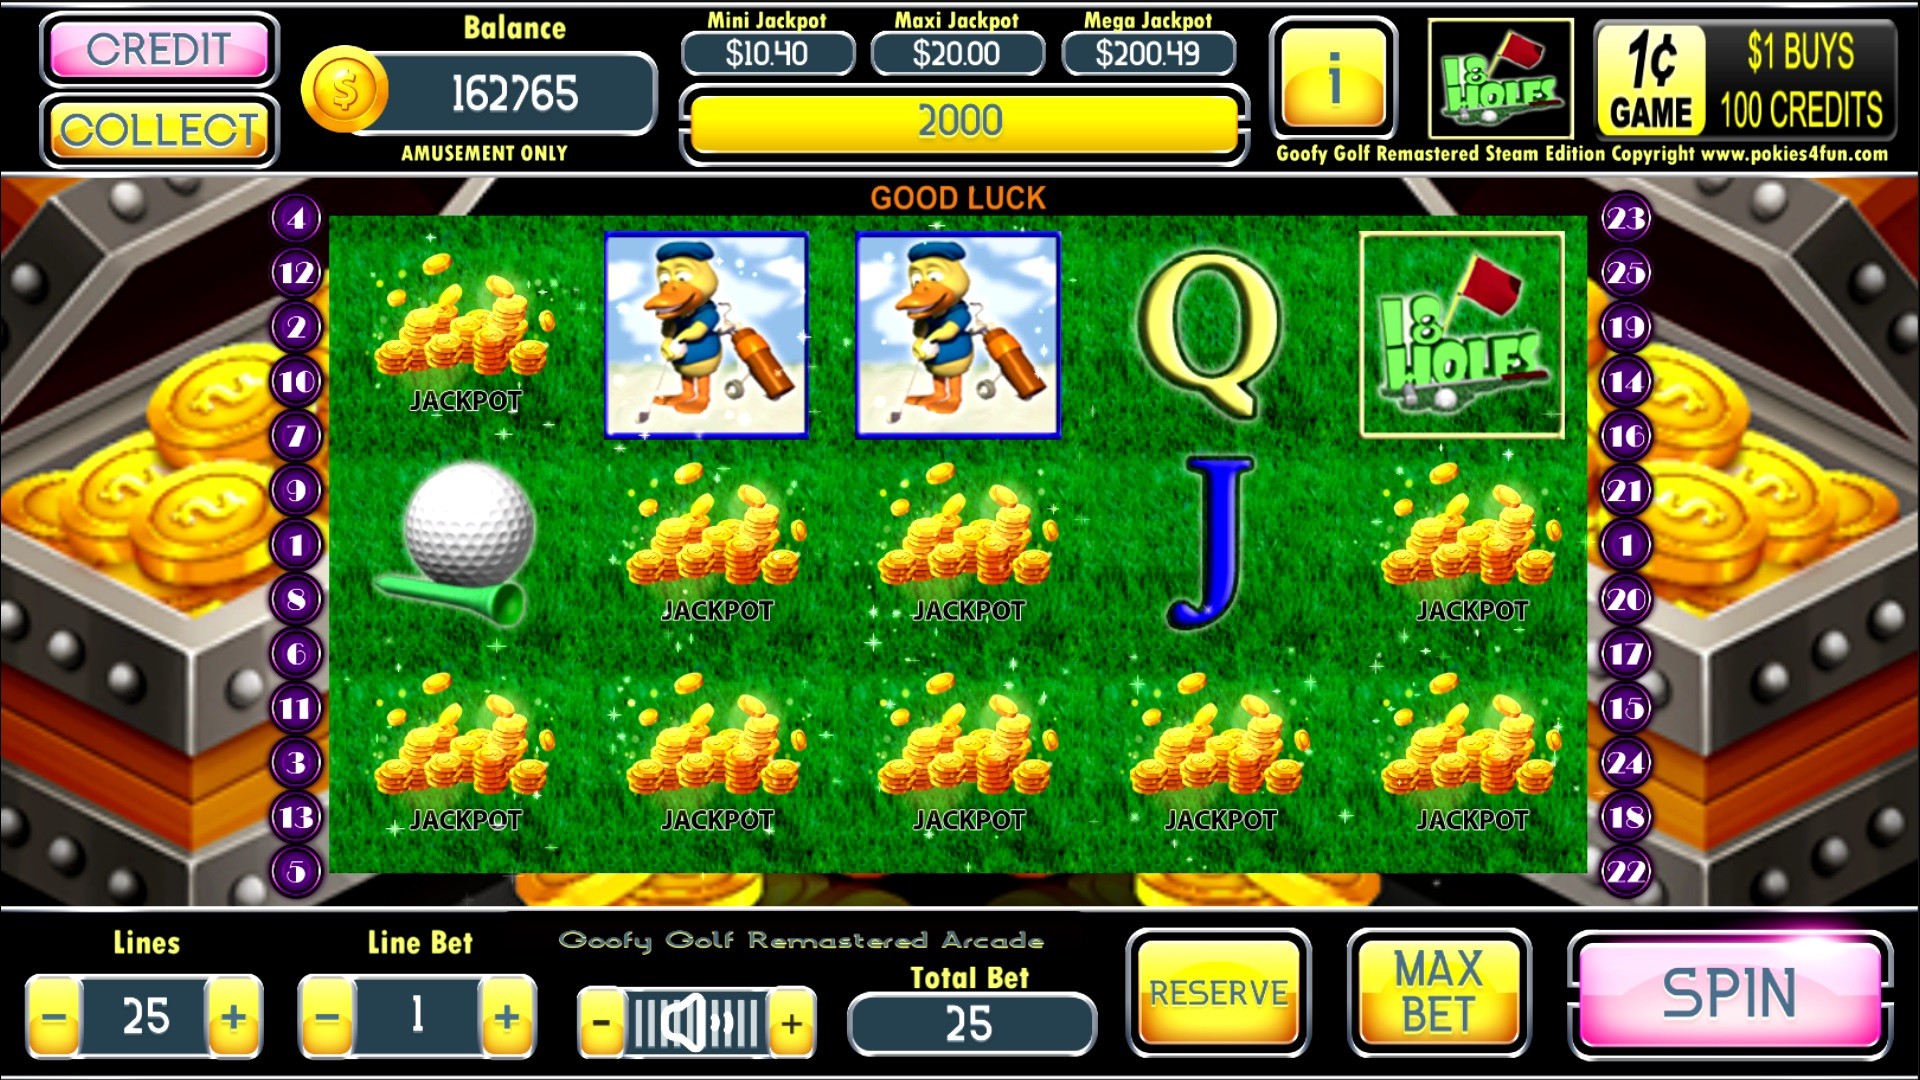 Goofy Golf Remastered Steam Edition screenshot